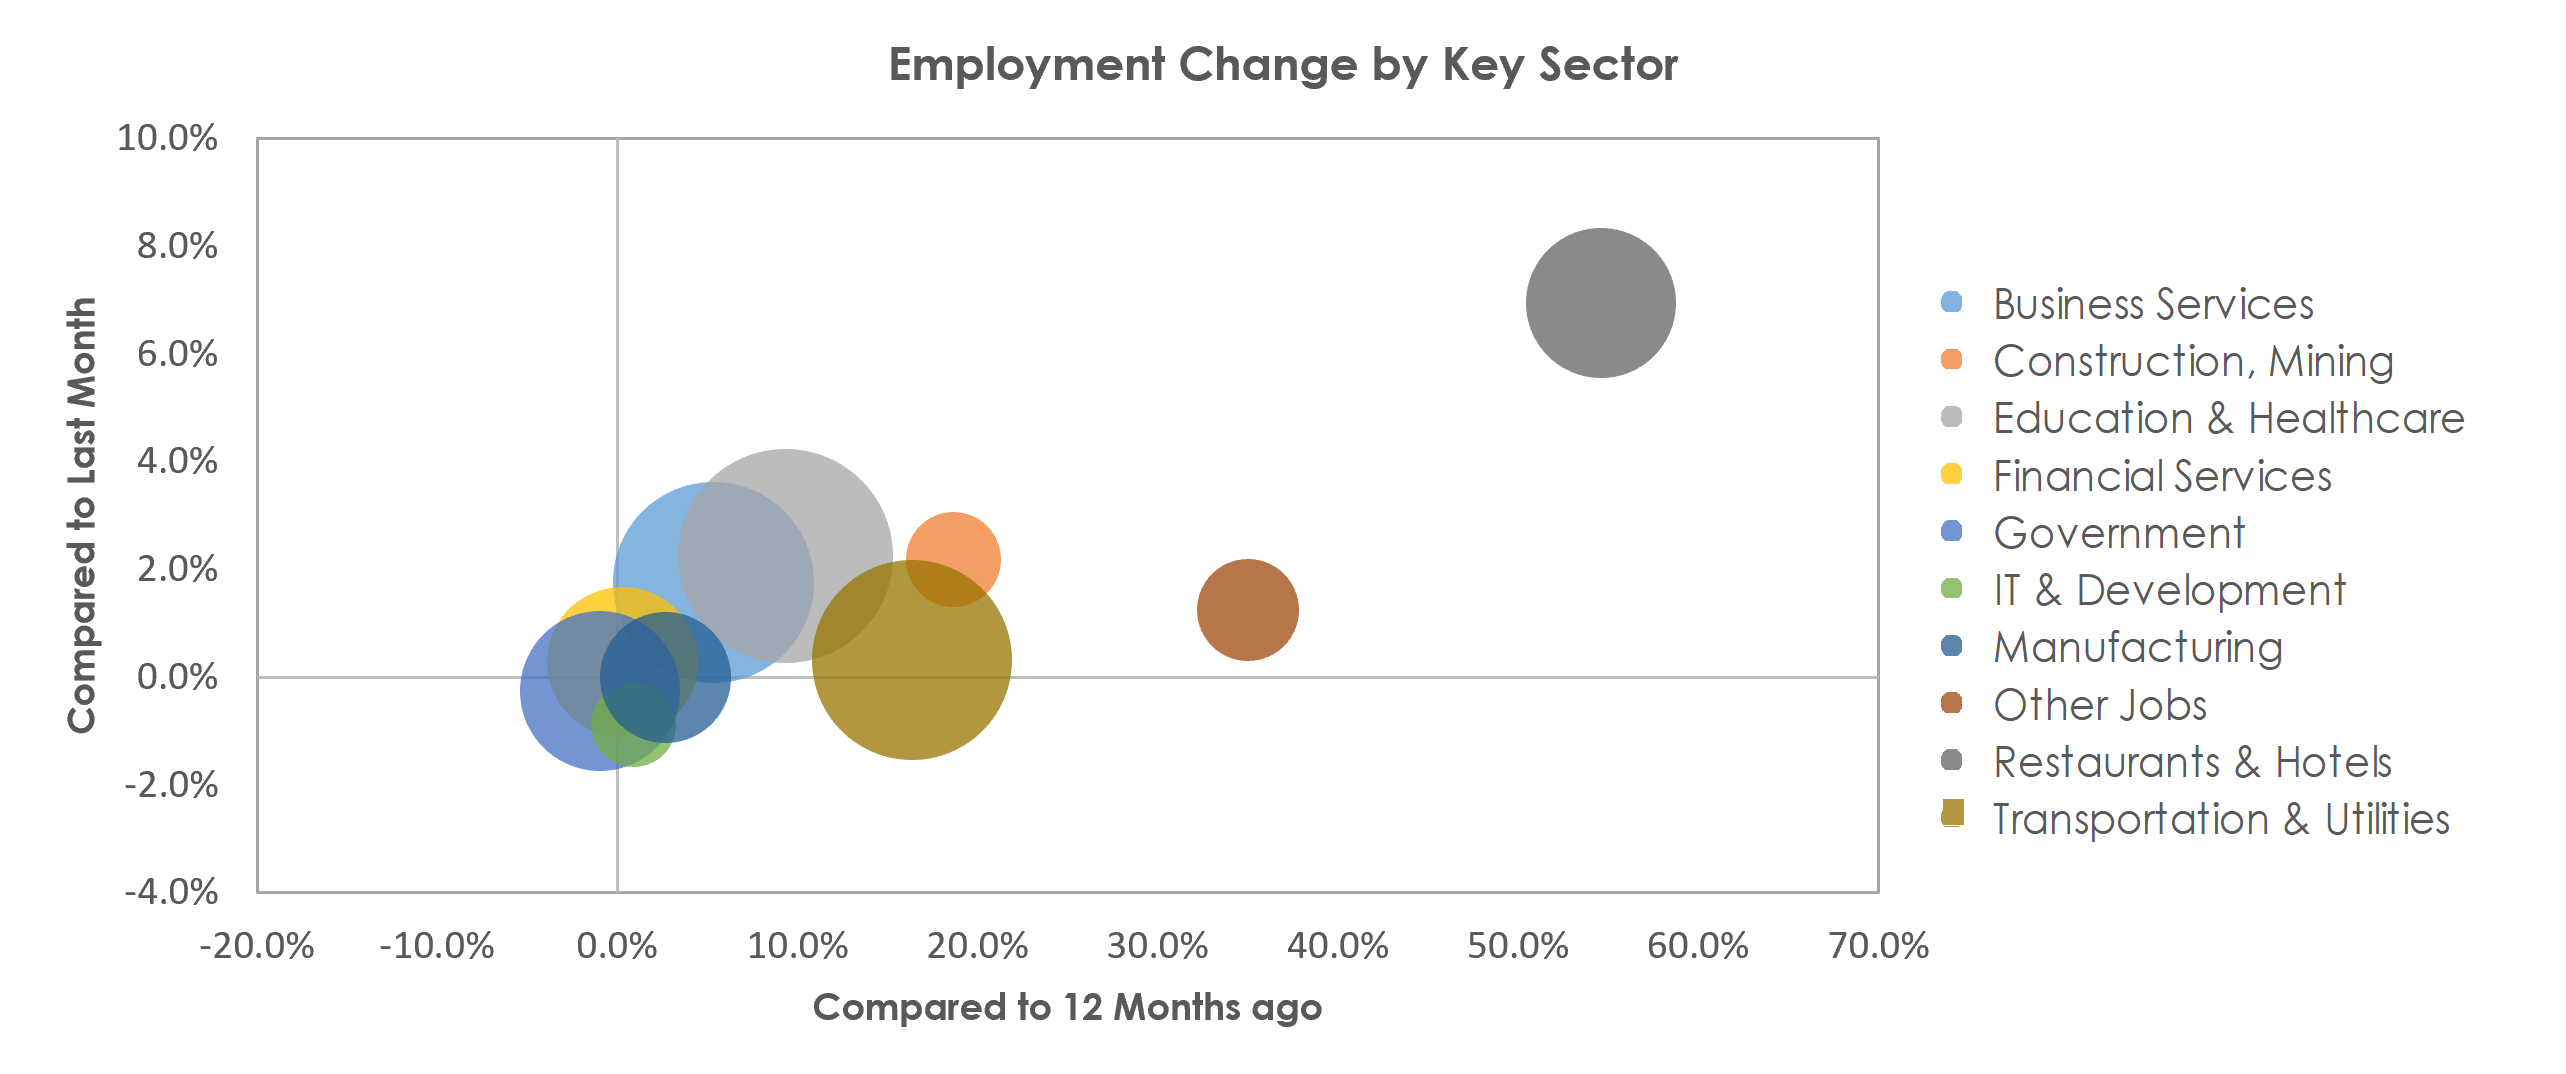 Bridgeport-Stamford-Norwalk, CT Unemployment by Industry May 2021